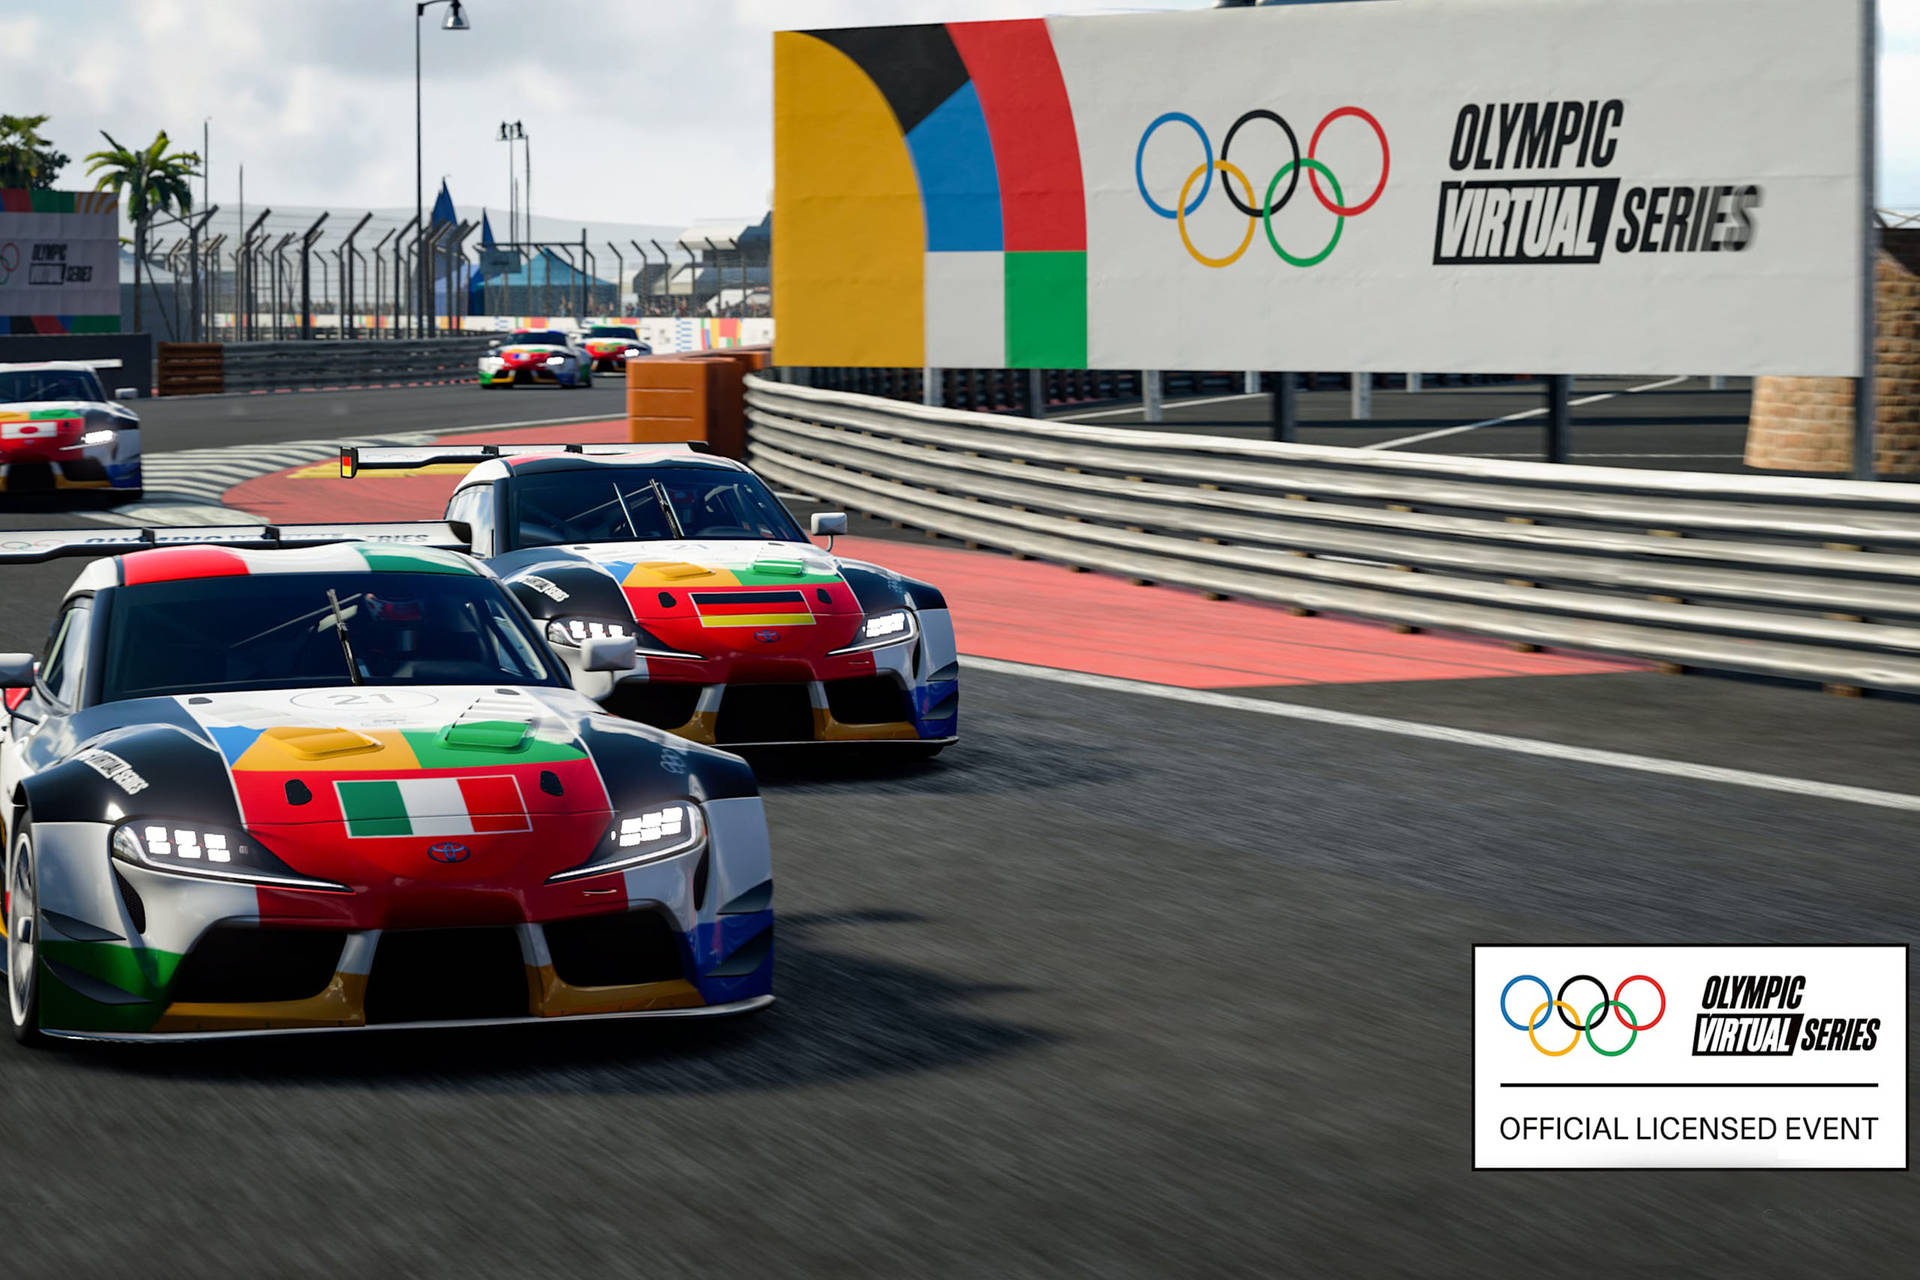 2021 Olympic Virtual Series Motorsport Event Wallpaper